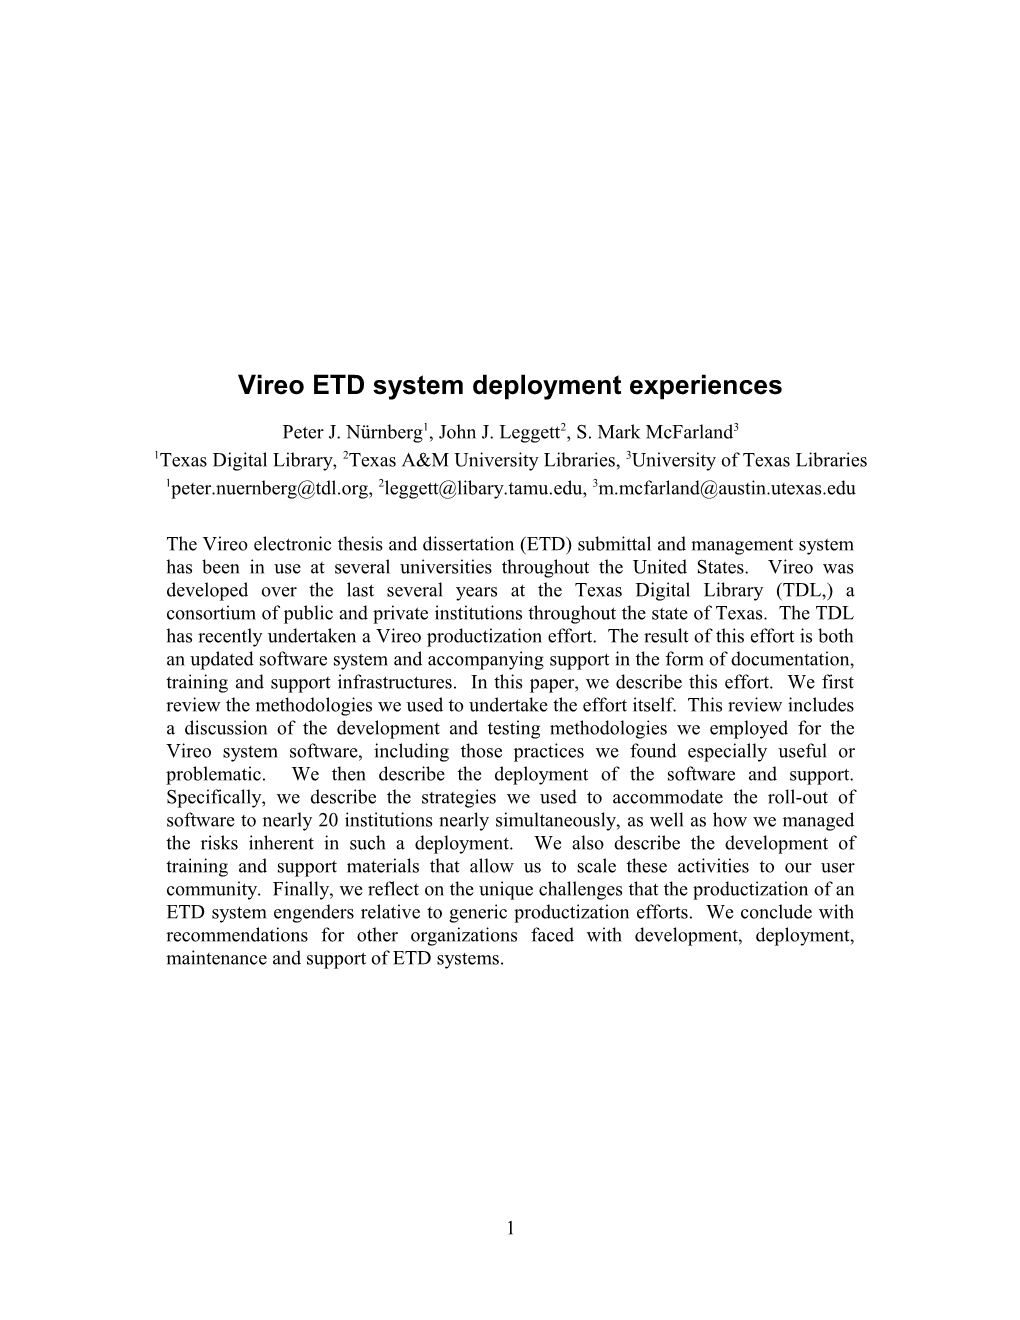 Vireo ETD System Deployment Experiences